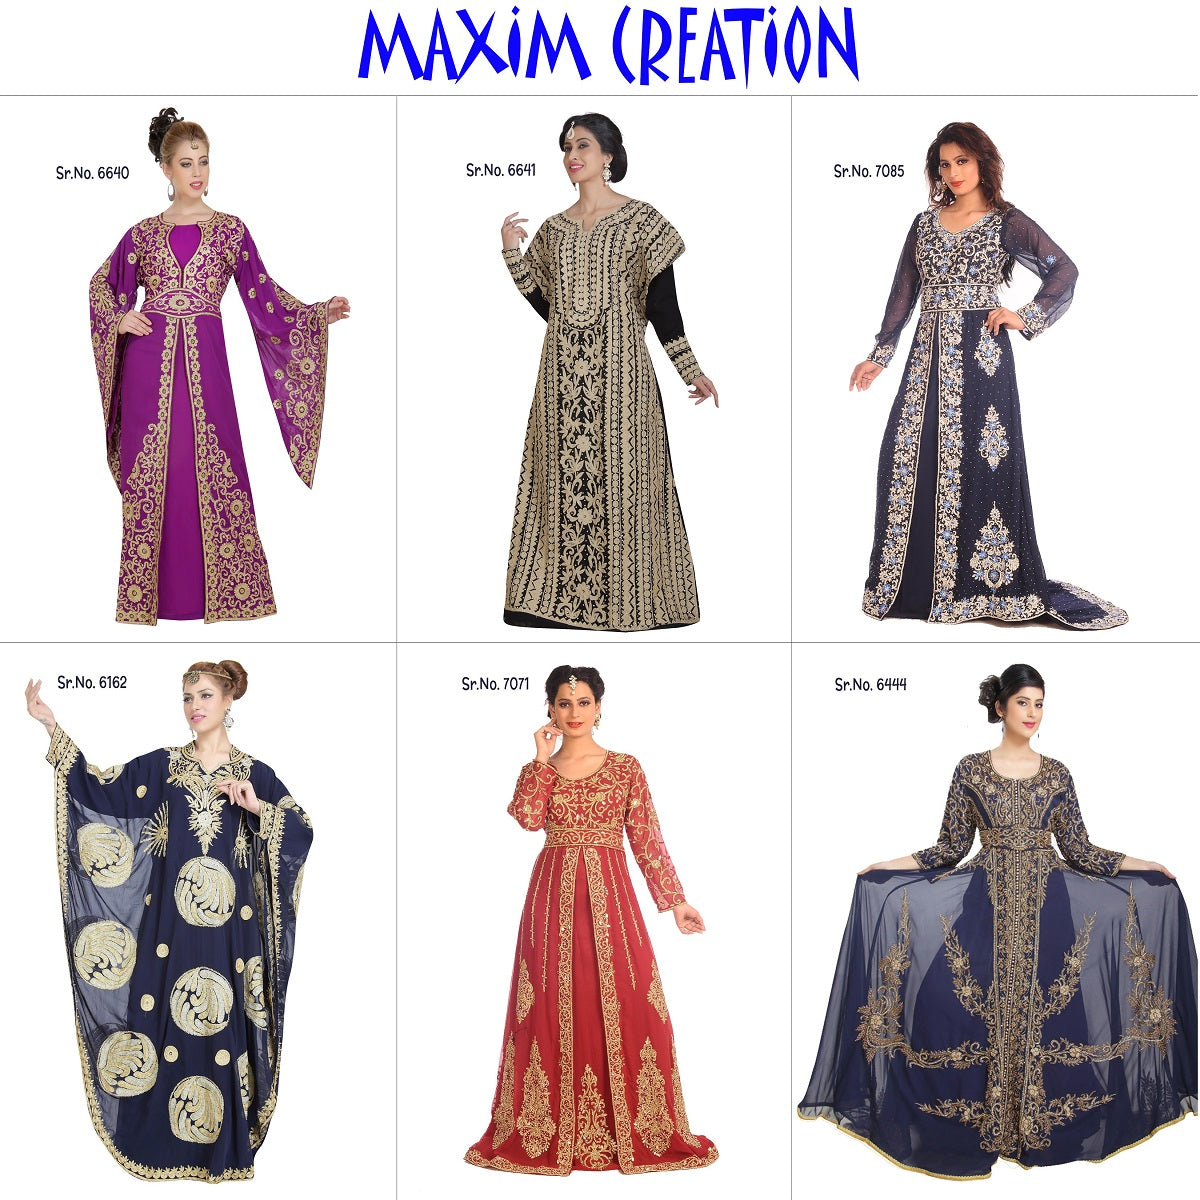 Load image into Gallery viewer, Dubai Caftan Hand Crafted Digital Printed Abaya Maxi - Maxim Creation
